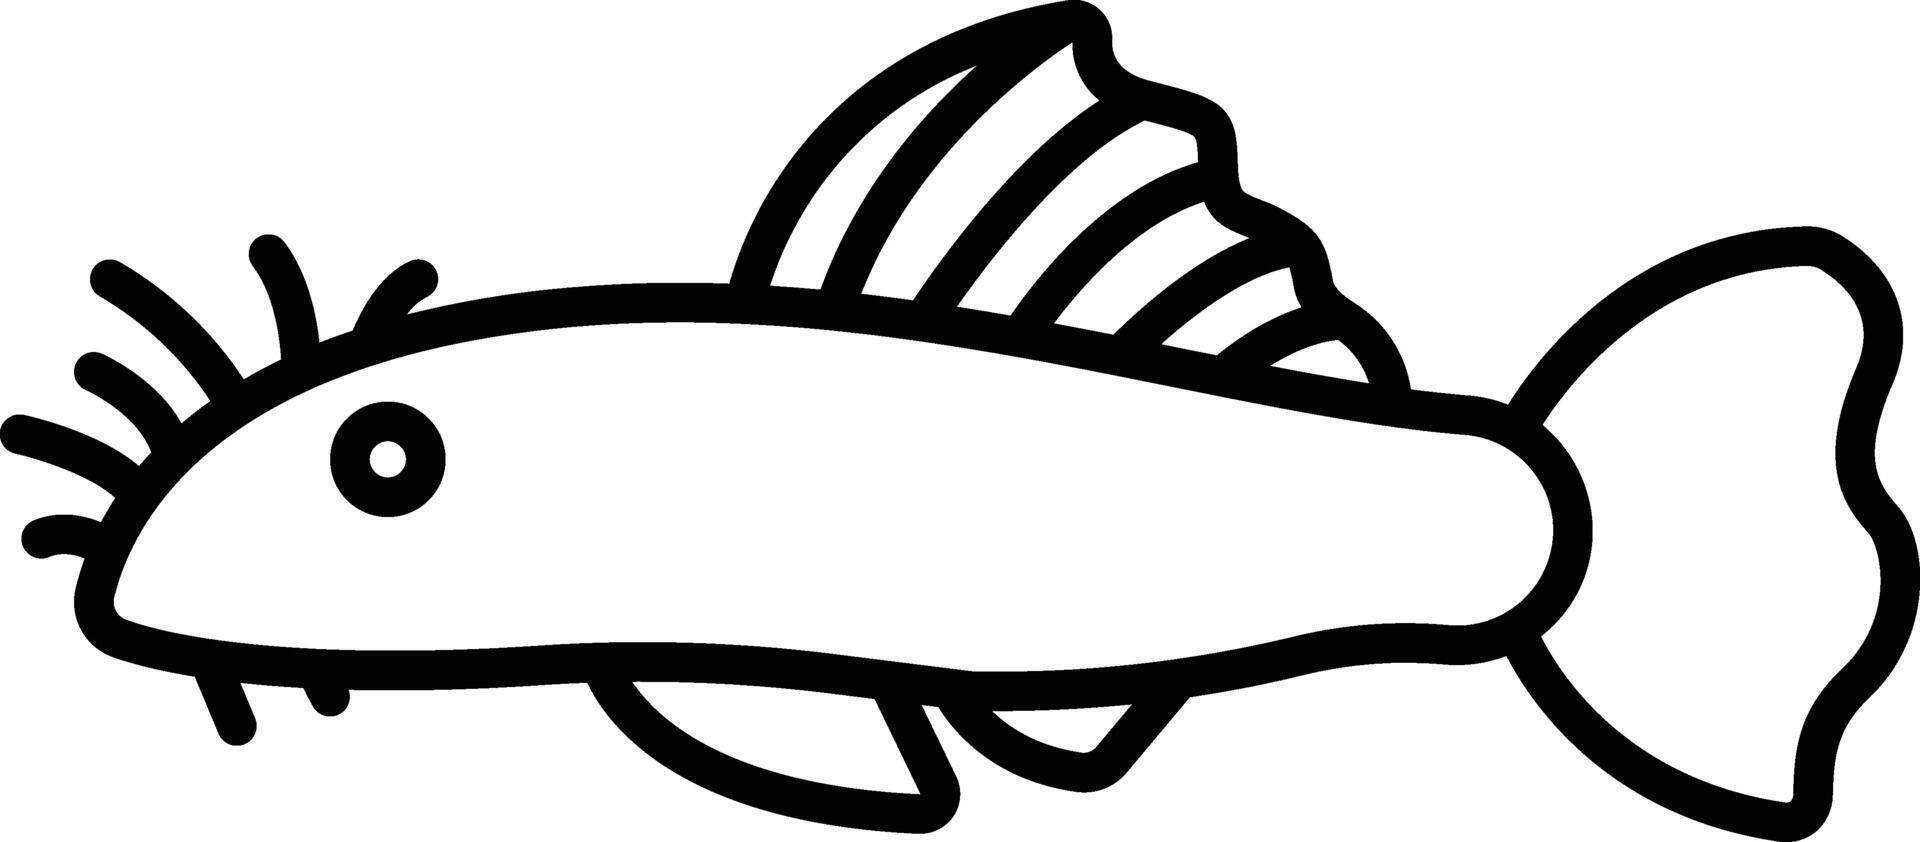 Ancistrus Fish outline illustration vector